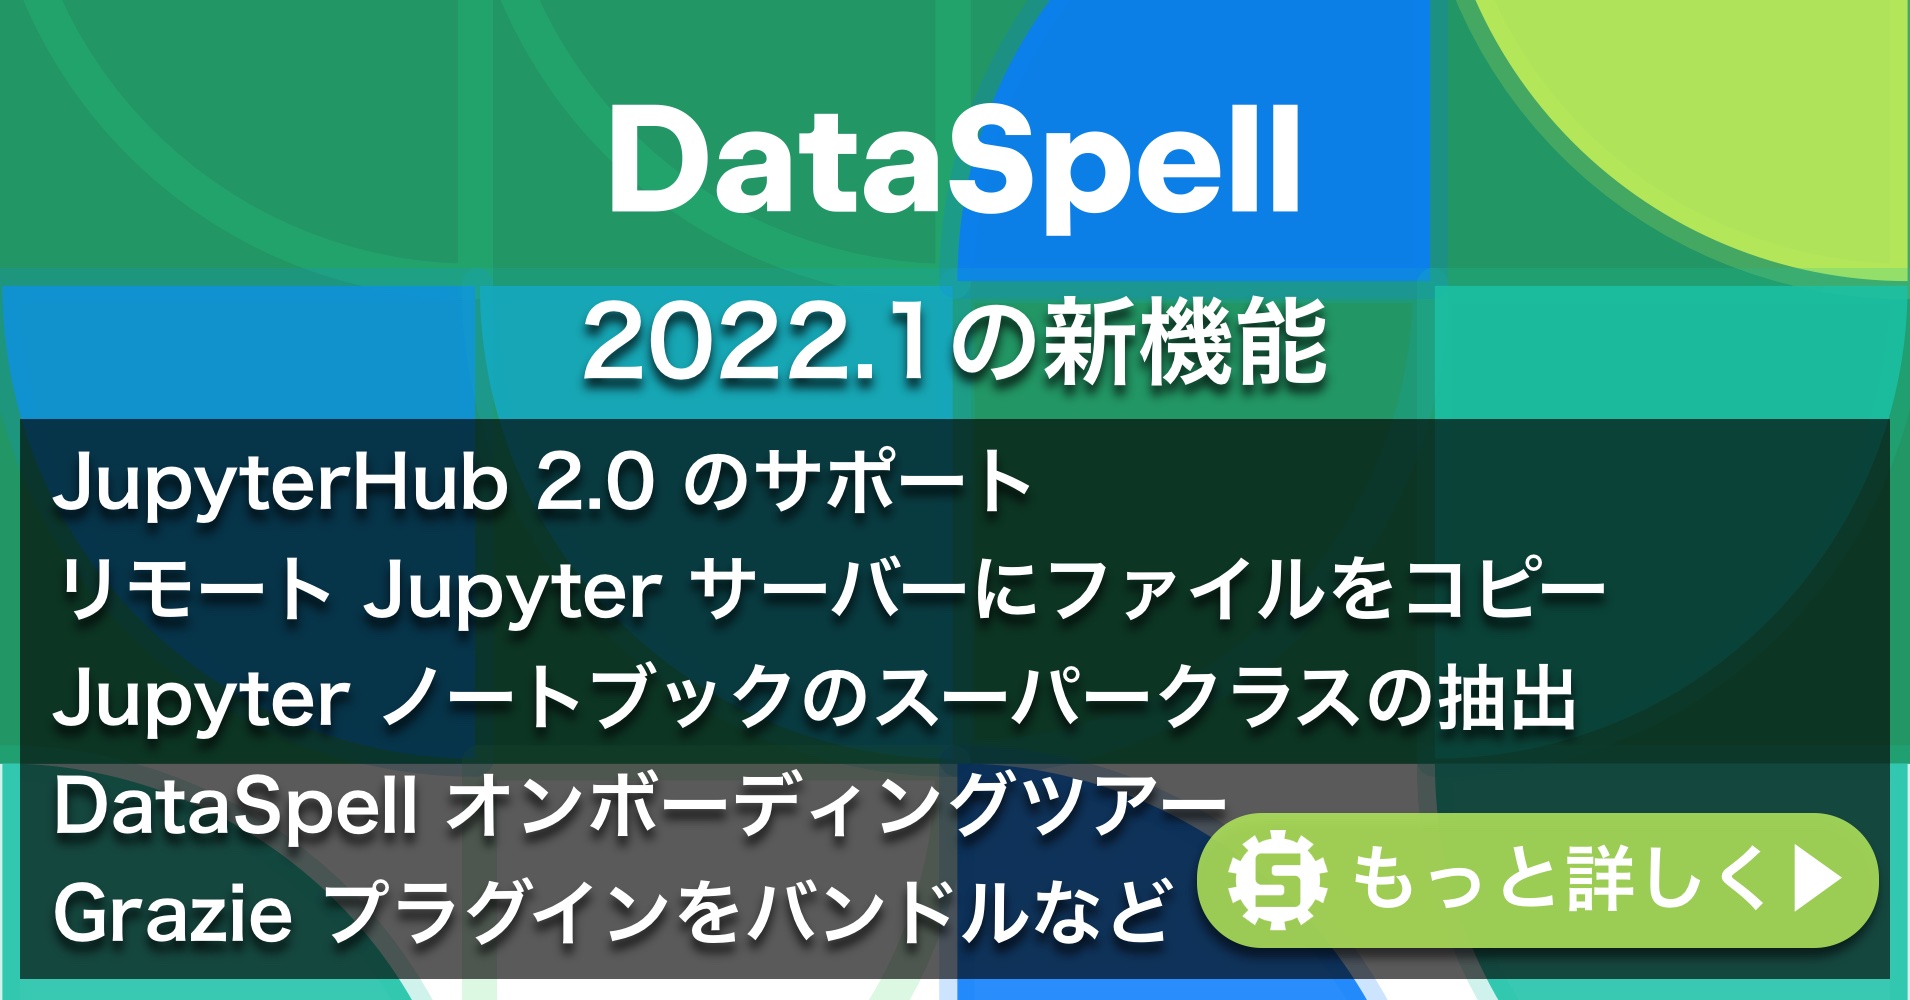 DataSpell 2022.1の新機能